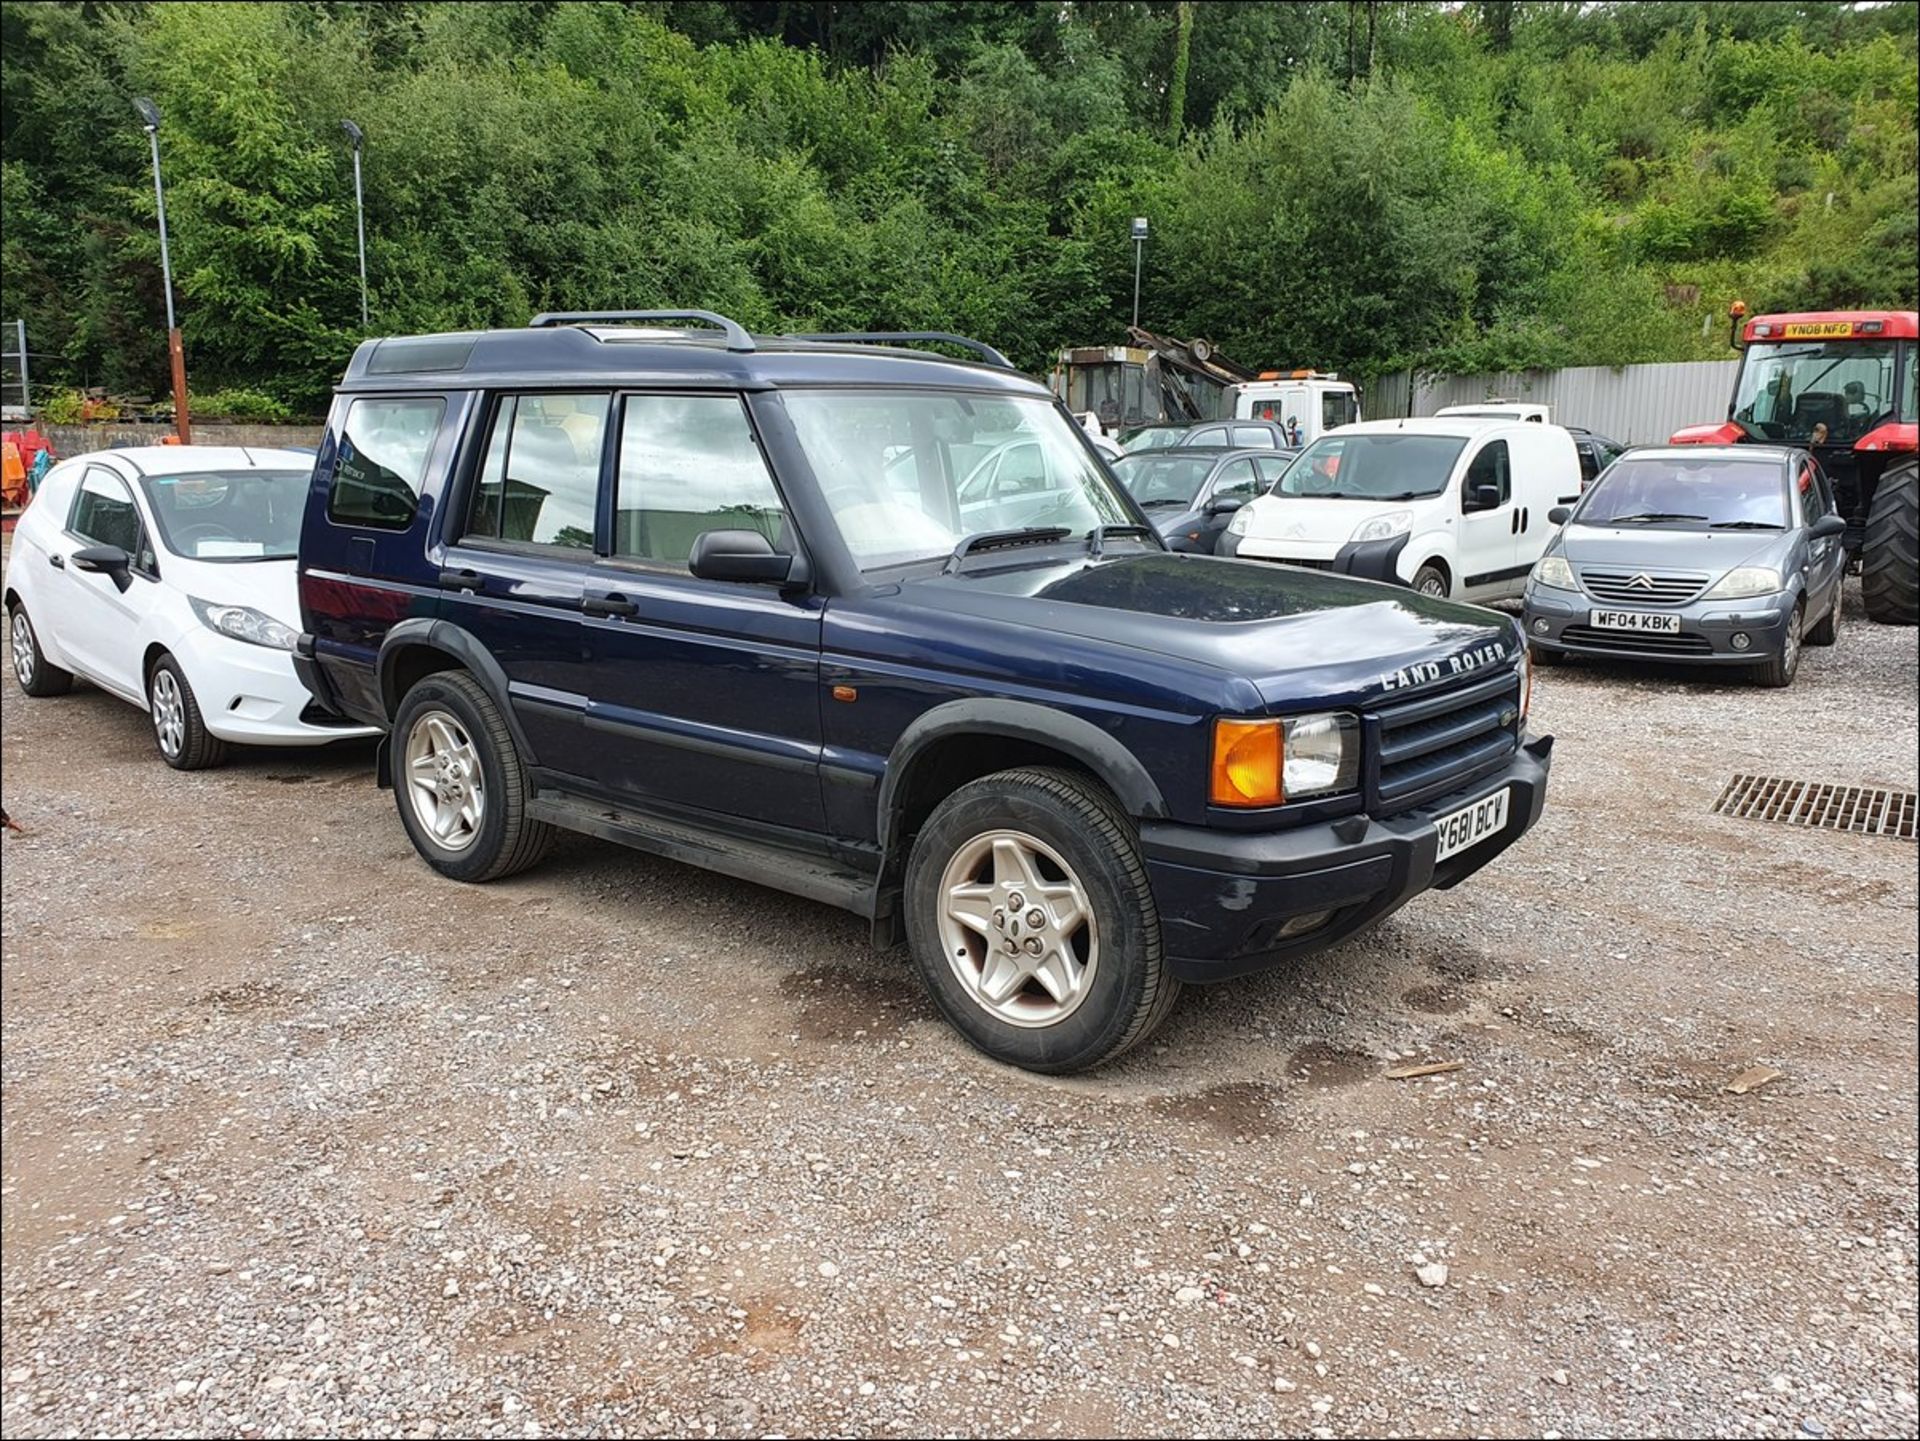 01/Y Land Rover Discovery TD5 ES - 2495cc 5dr Estate (Blue, 143k) - Image 3 of 11